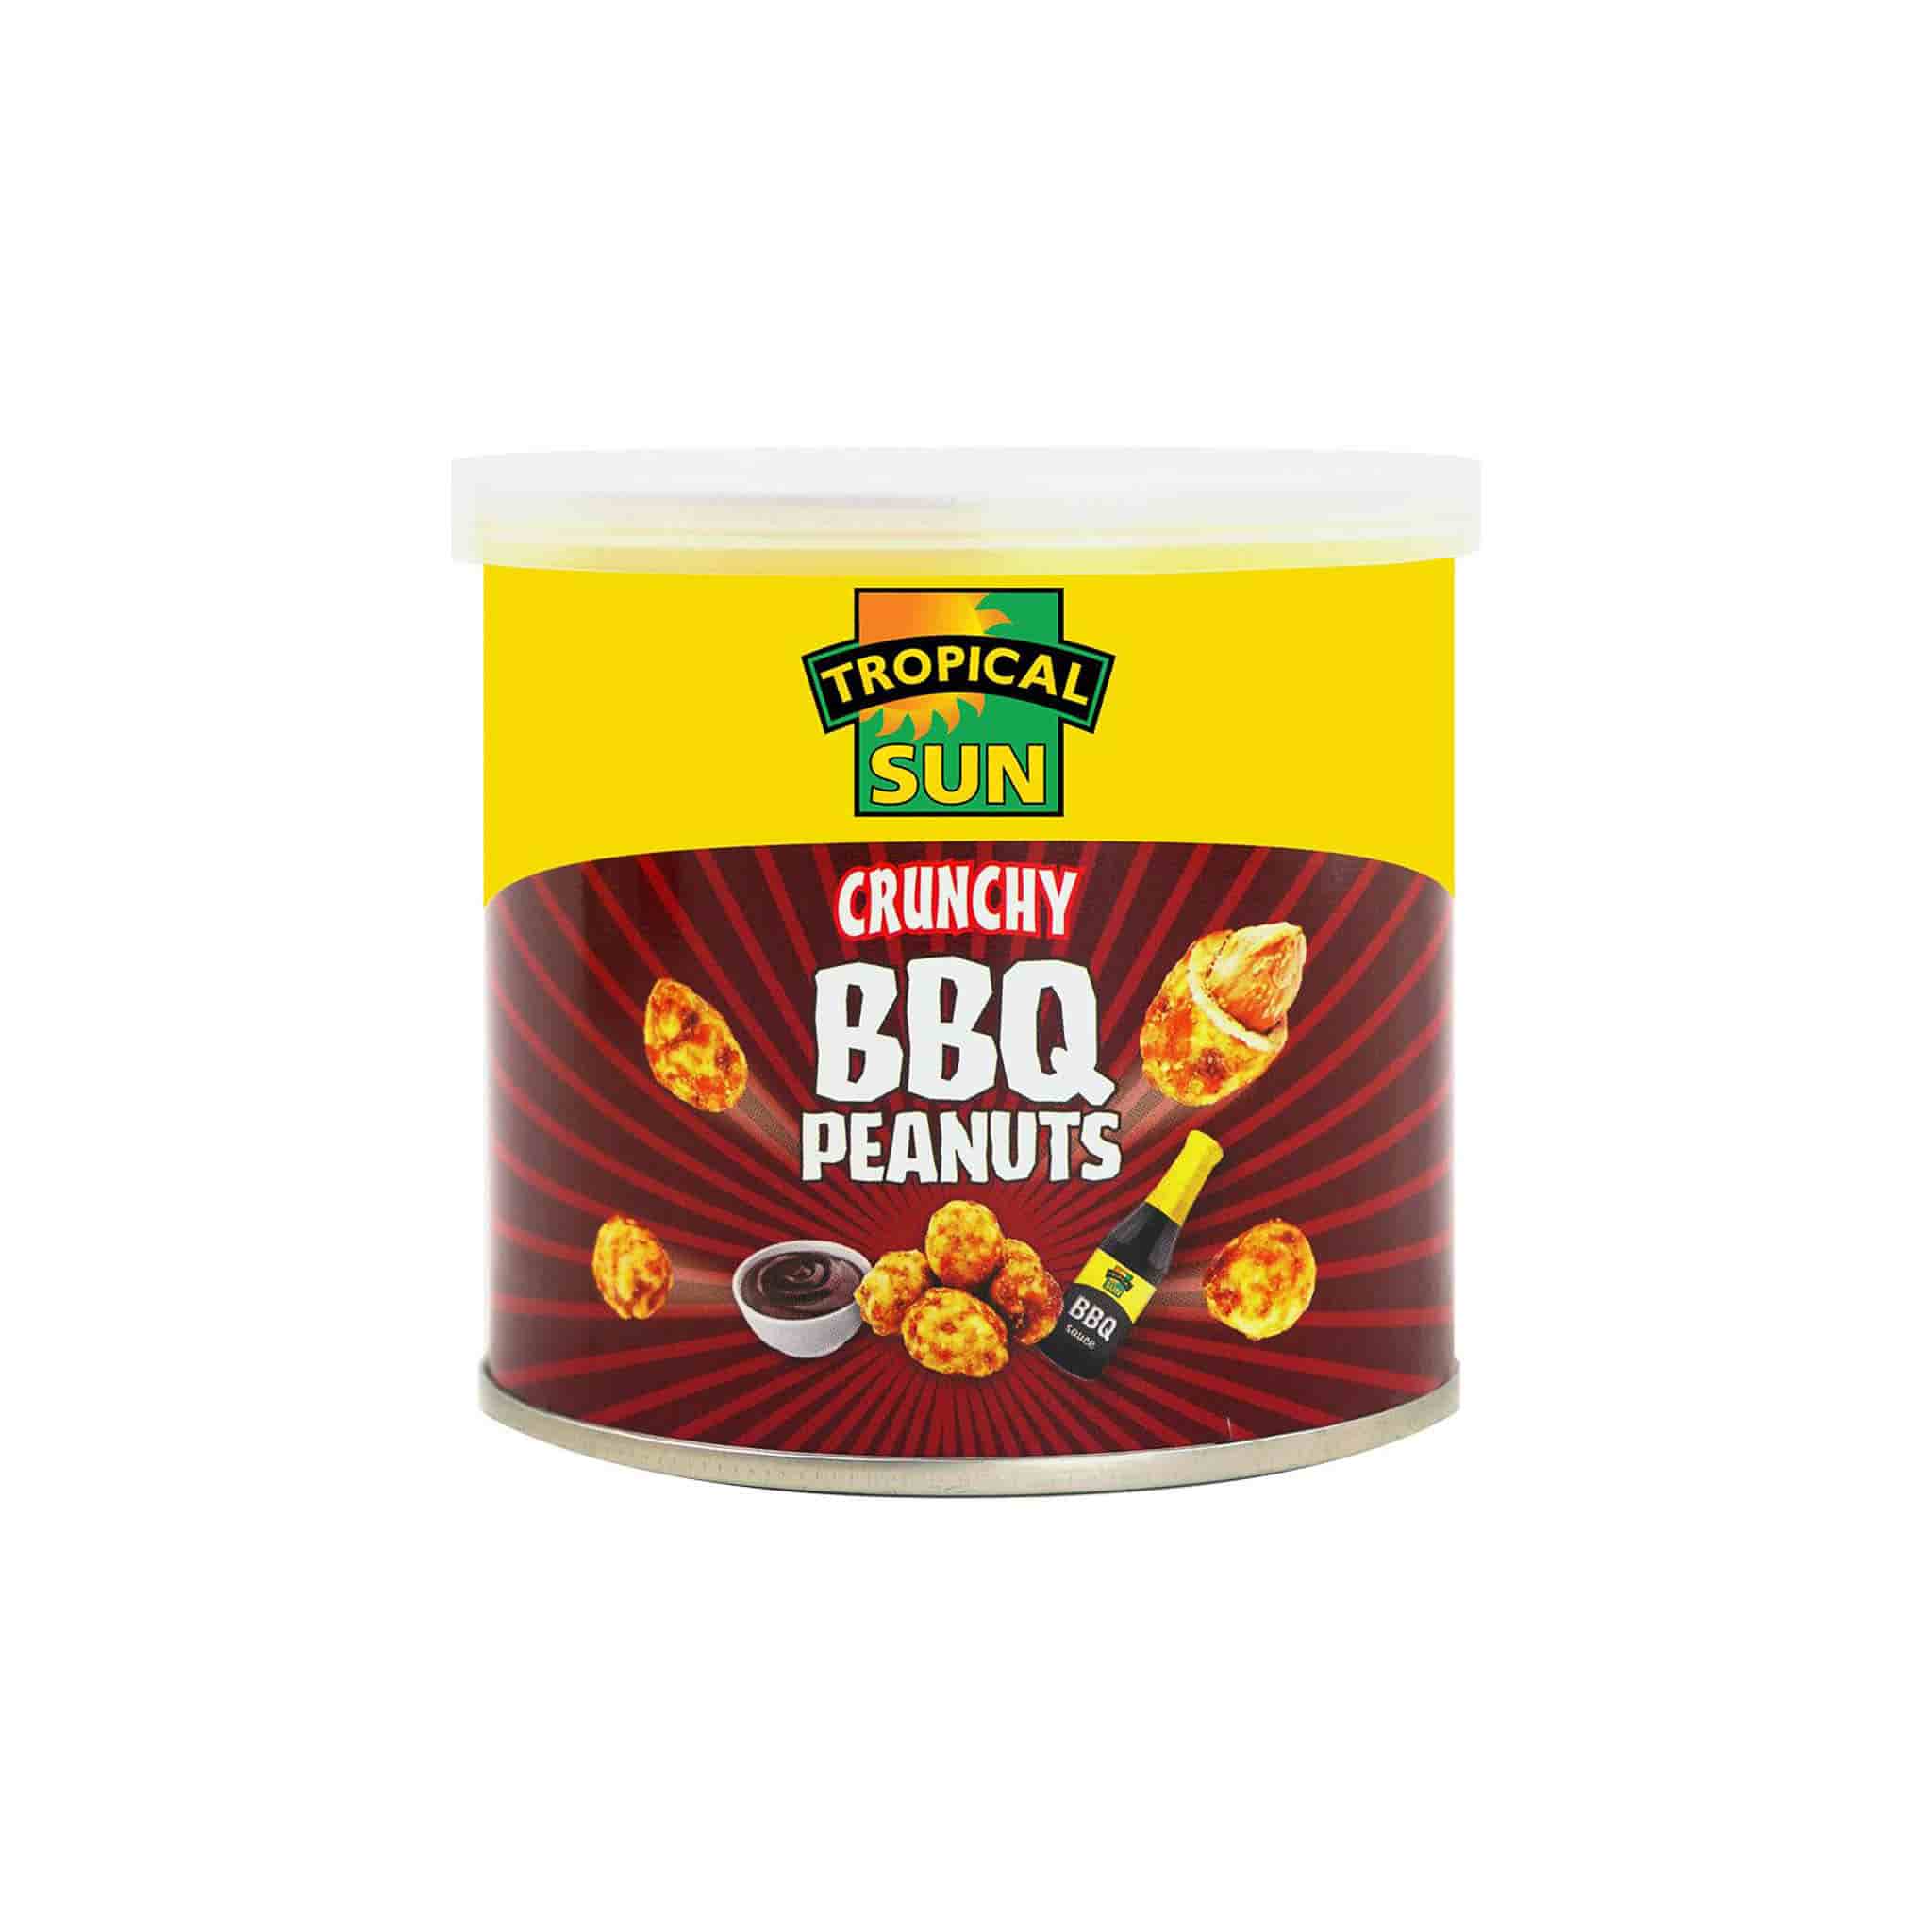 Tropical Sun Crunchy BBQ Peanuts, 140g